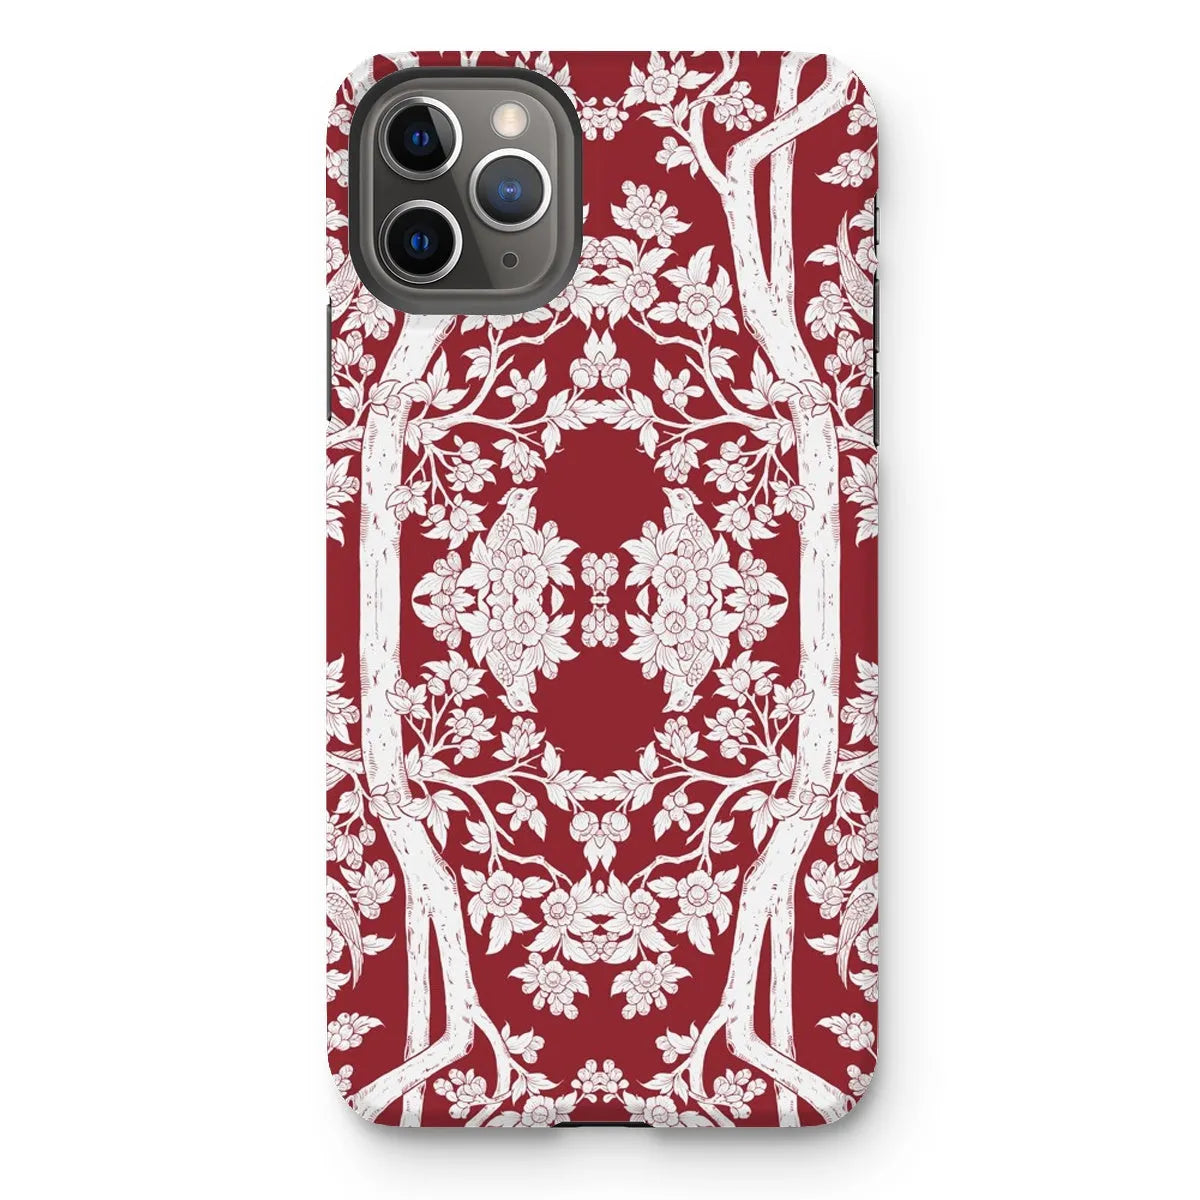 Aviary Red Aesthetic Pattern Art Phone Case - Iphone 11 Pro Max / Matte - Mobile Phone Cases - Aesthetic Art